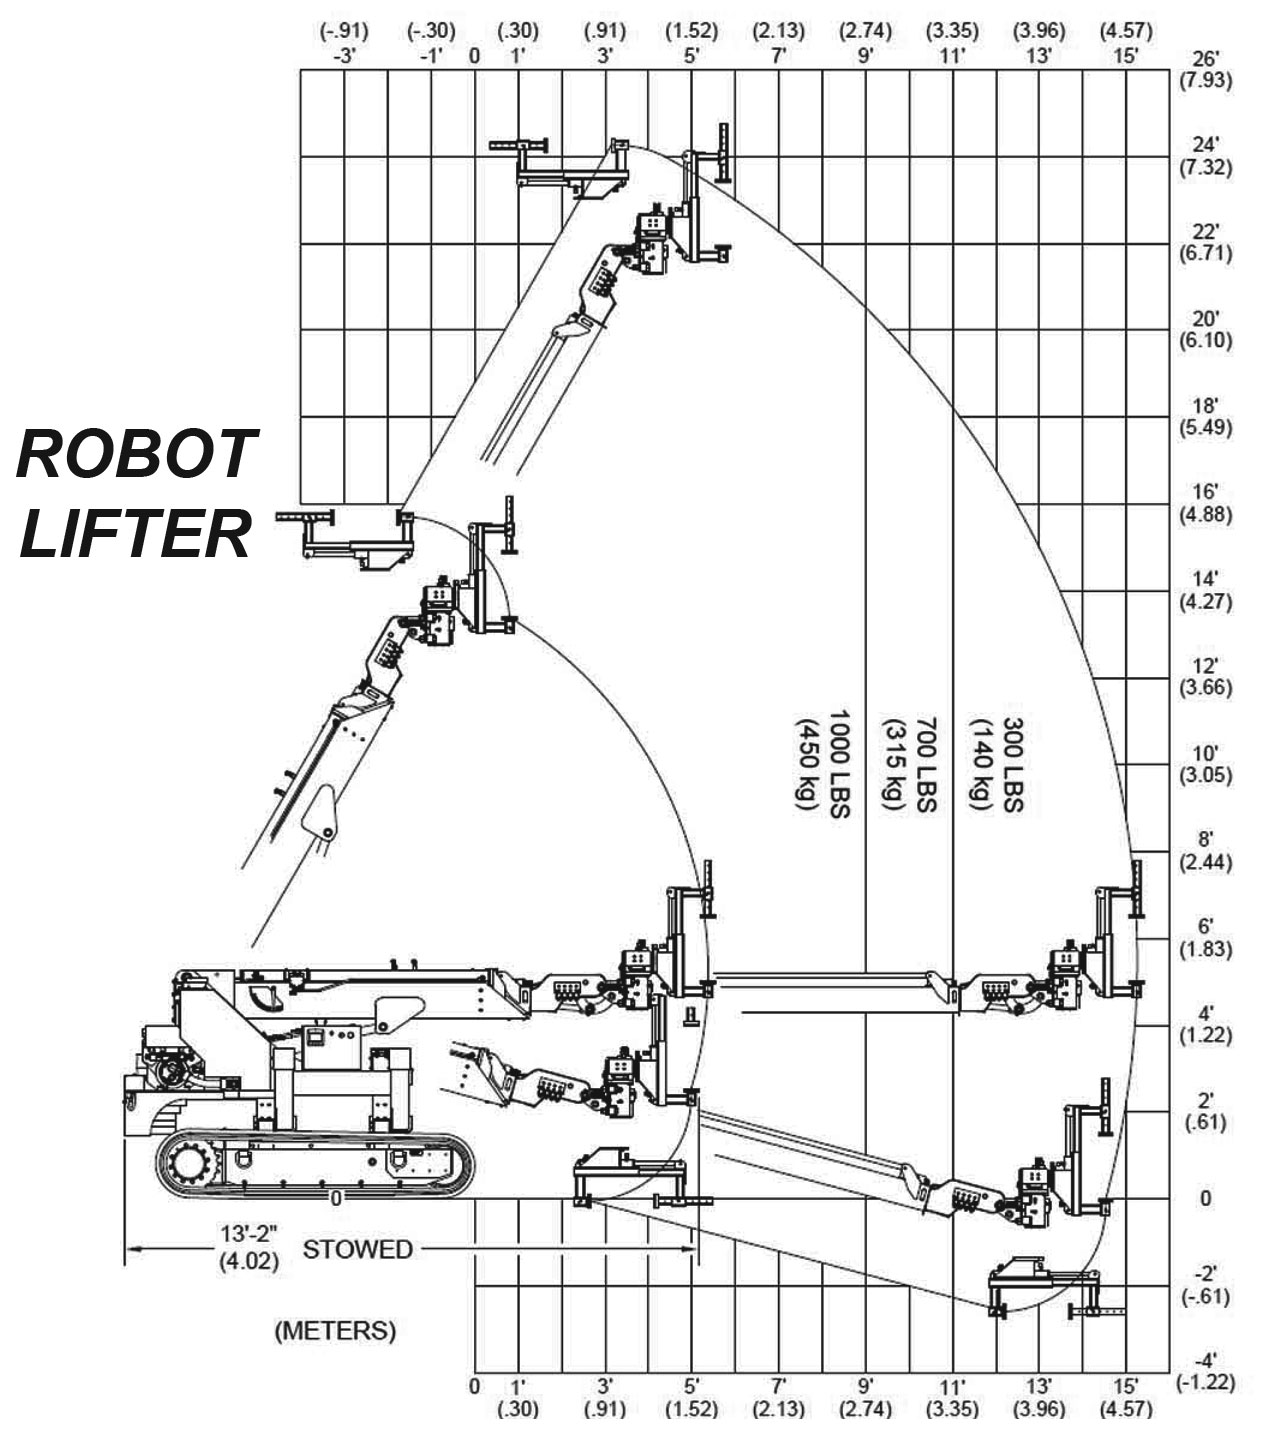 Brandon Trax Robot Lifter Load Capacity